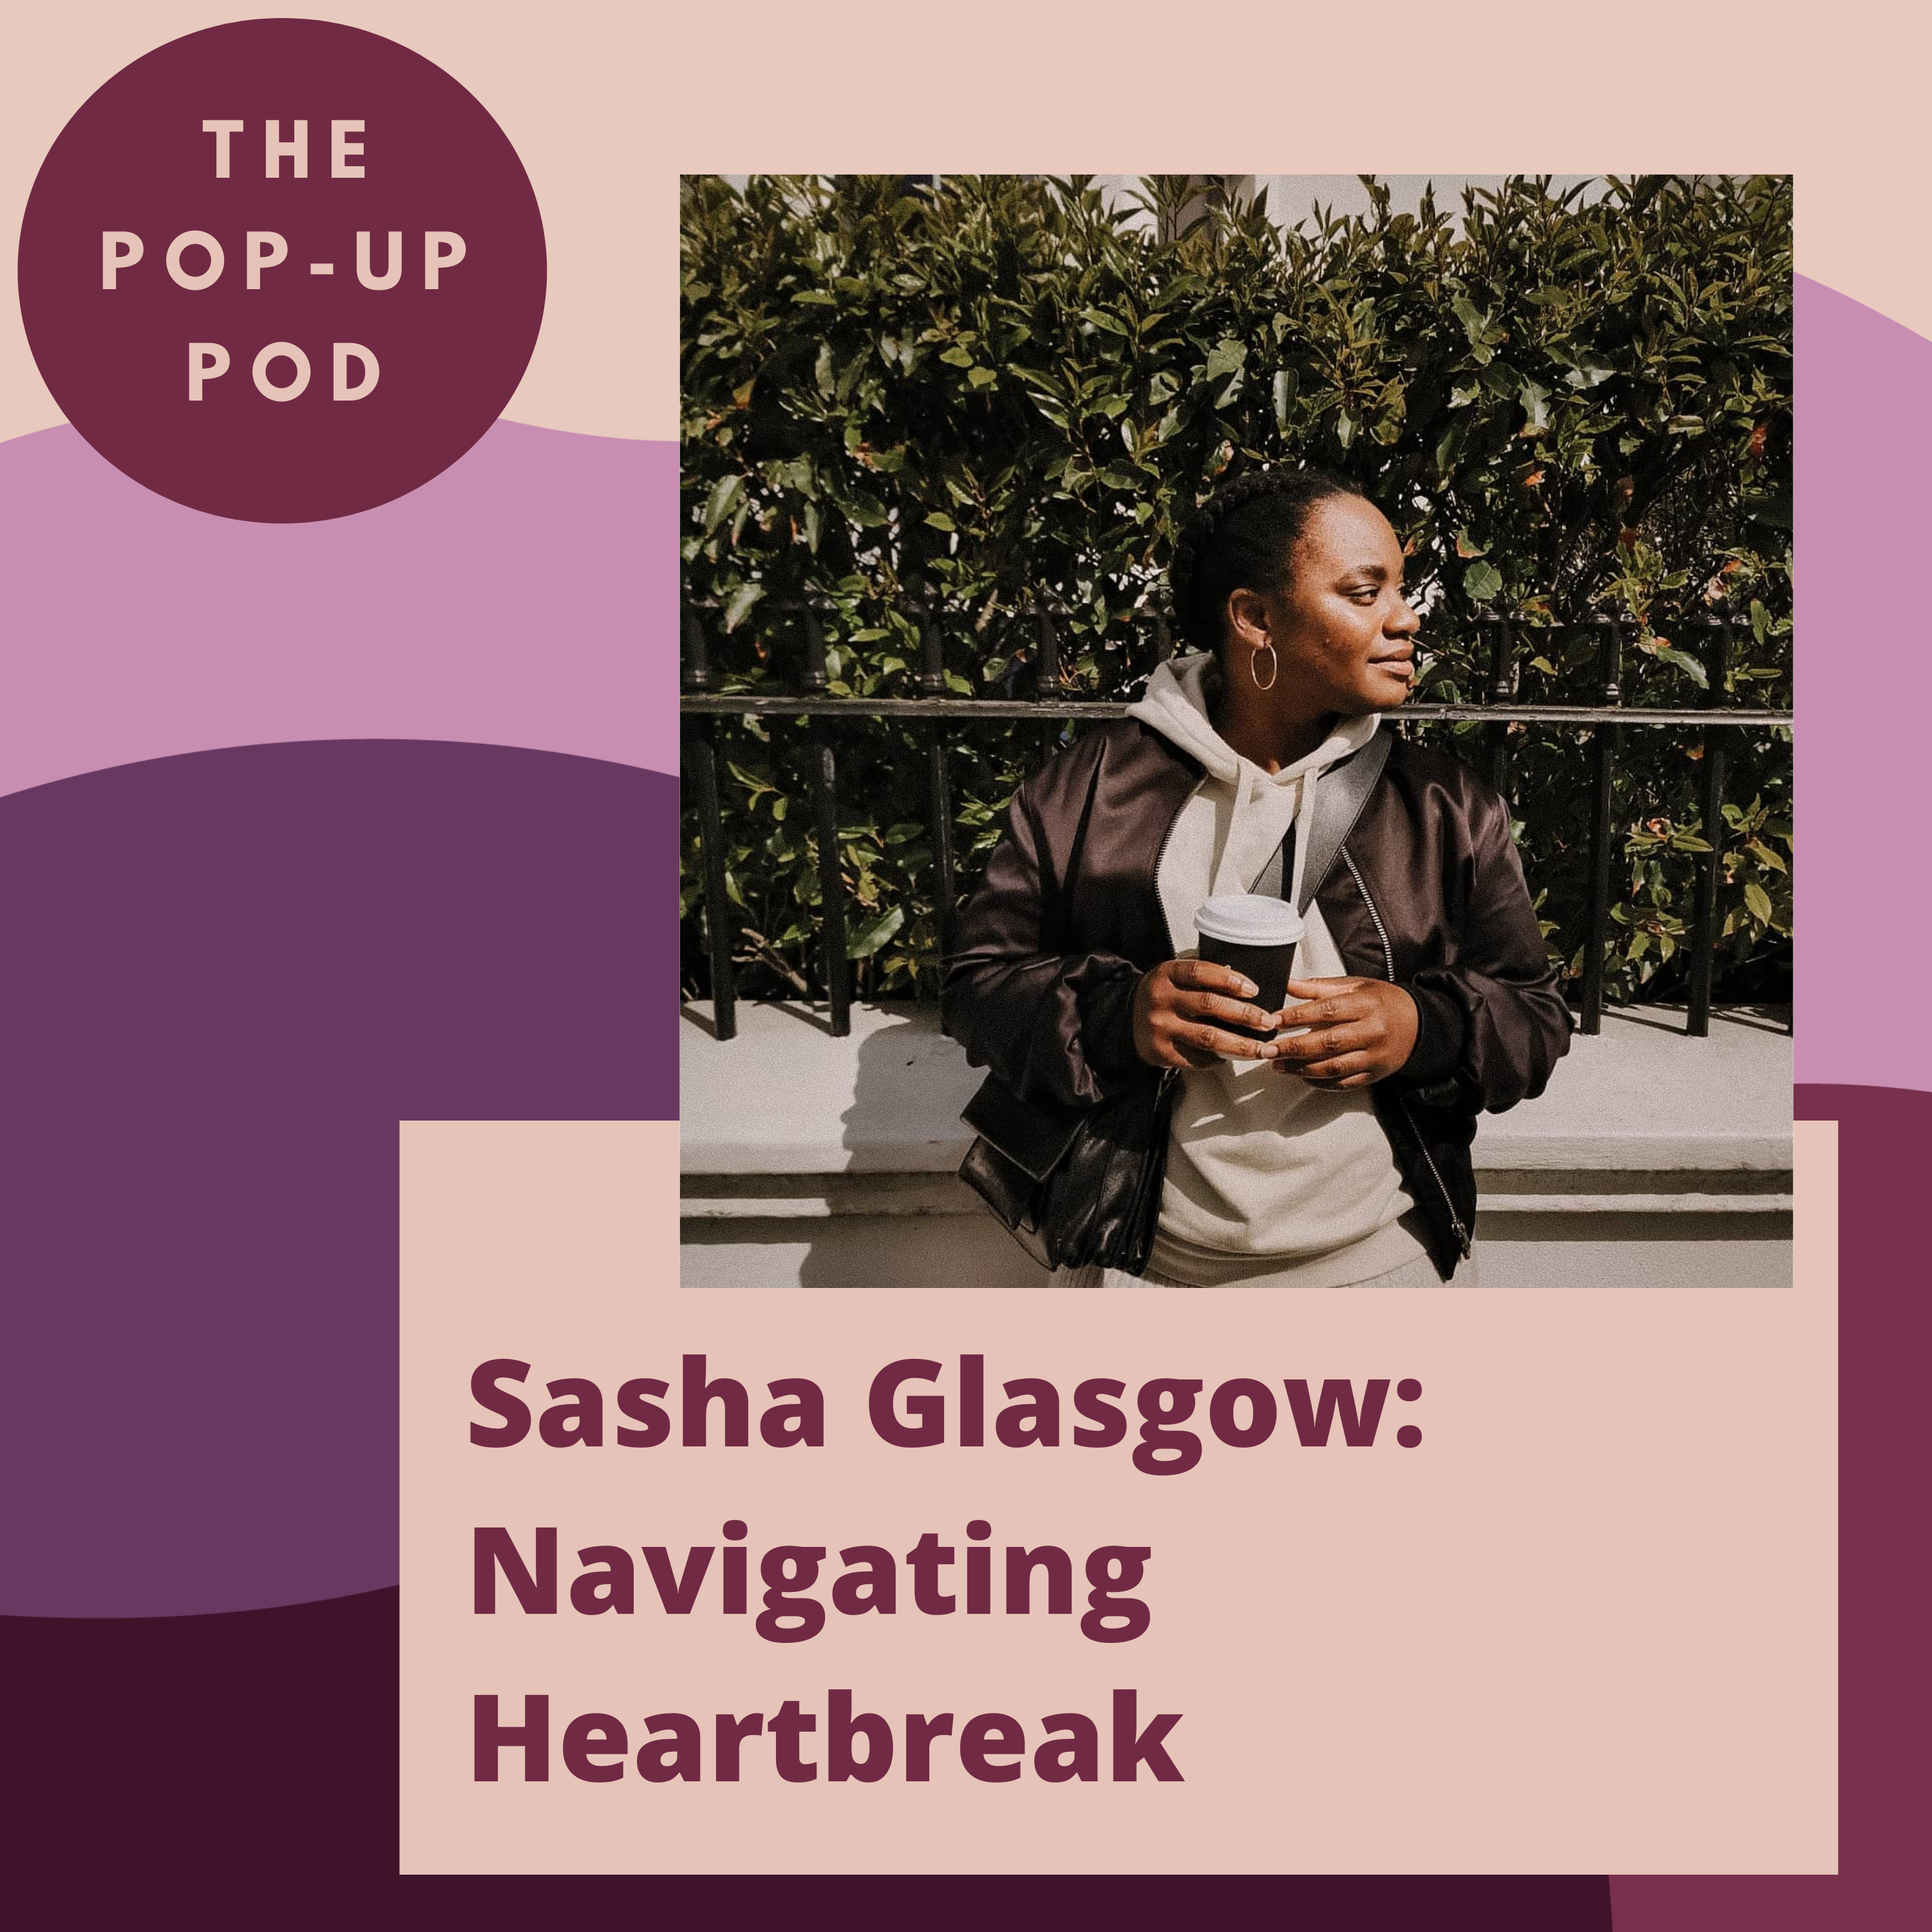 Sasha Glasgow: Navigating Heartbreak